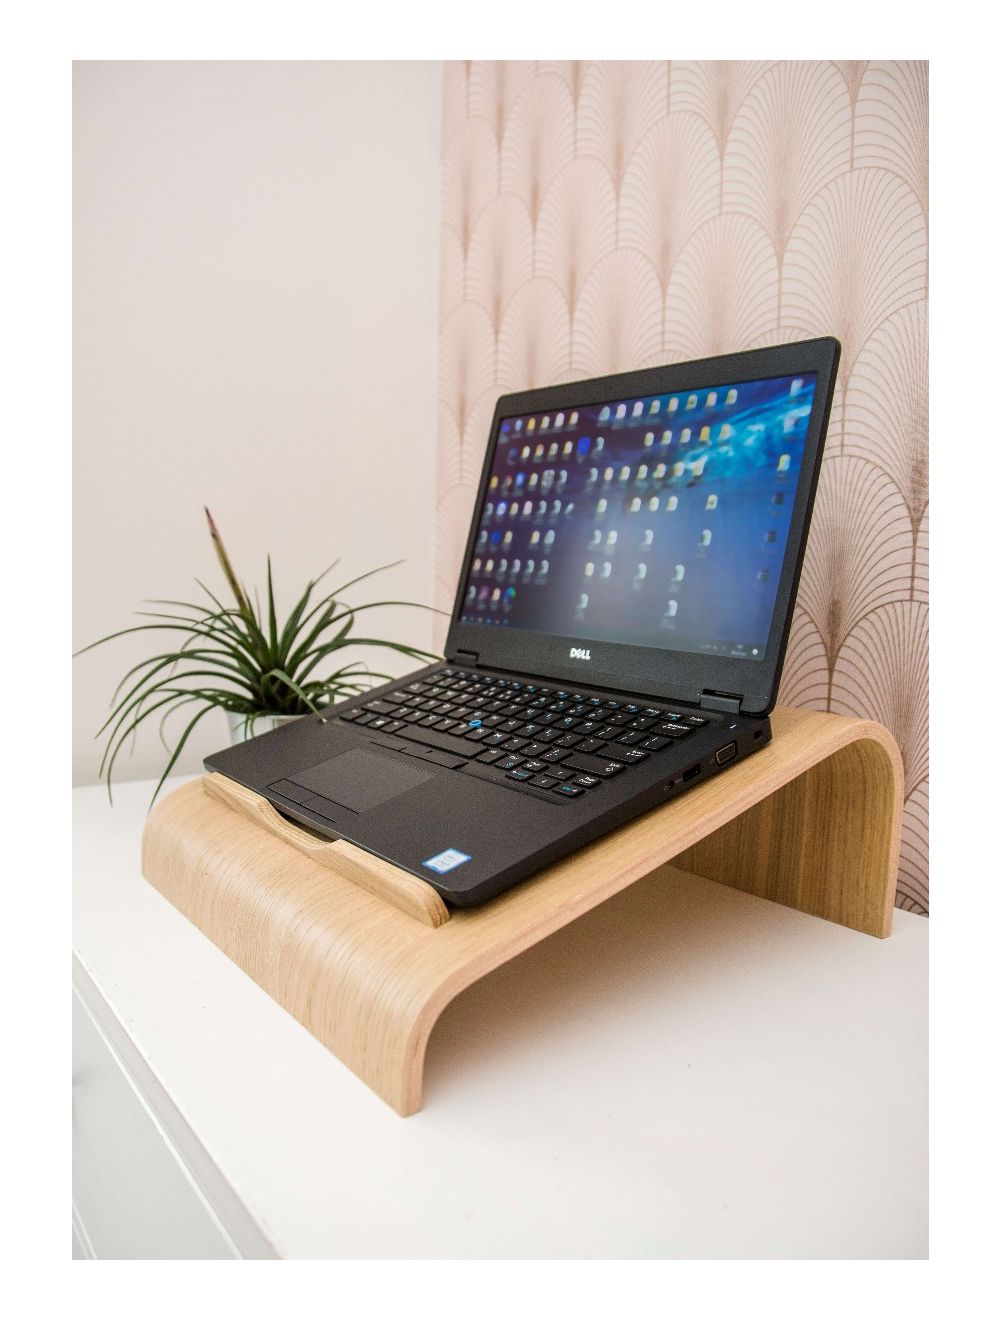 Wooden mounted laptop stand, oak